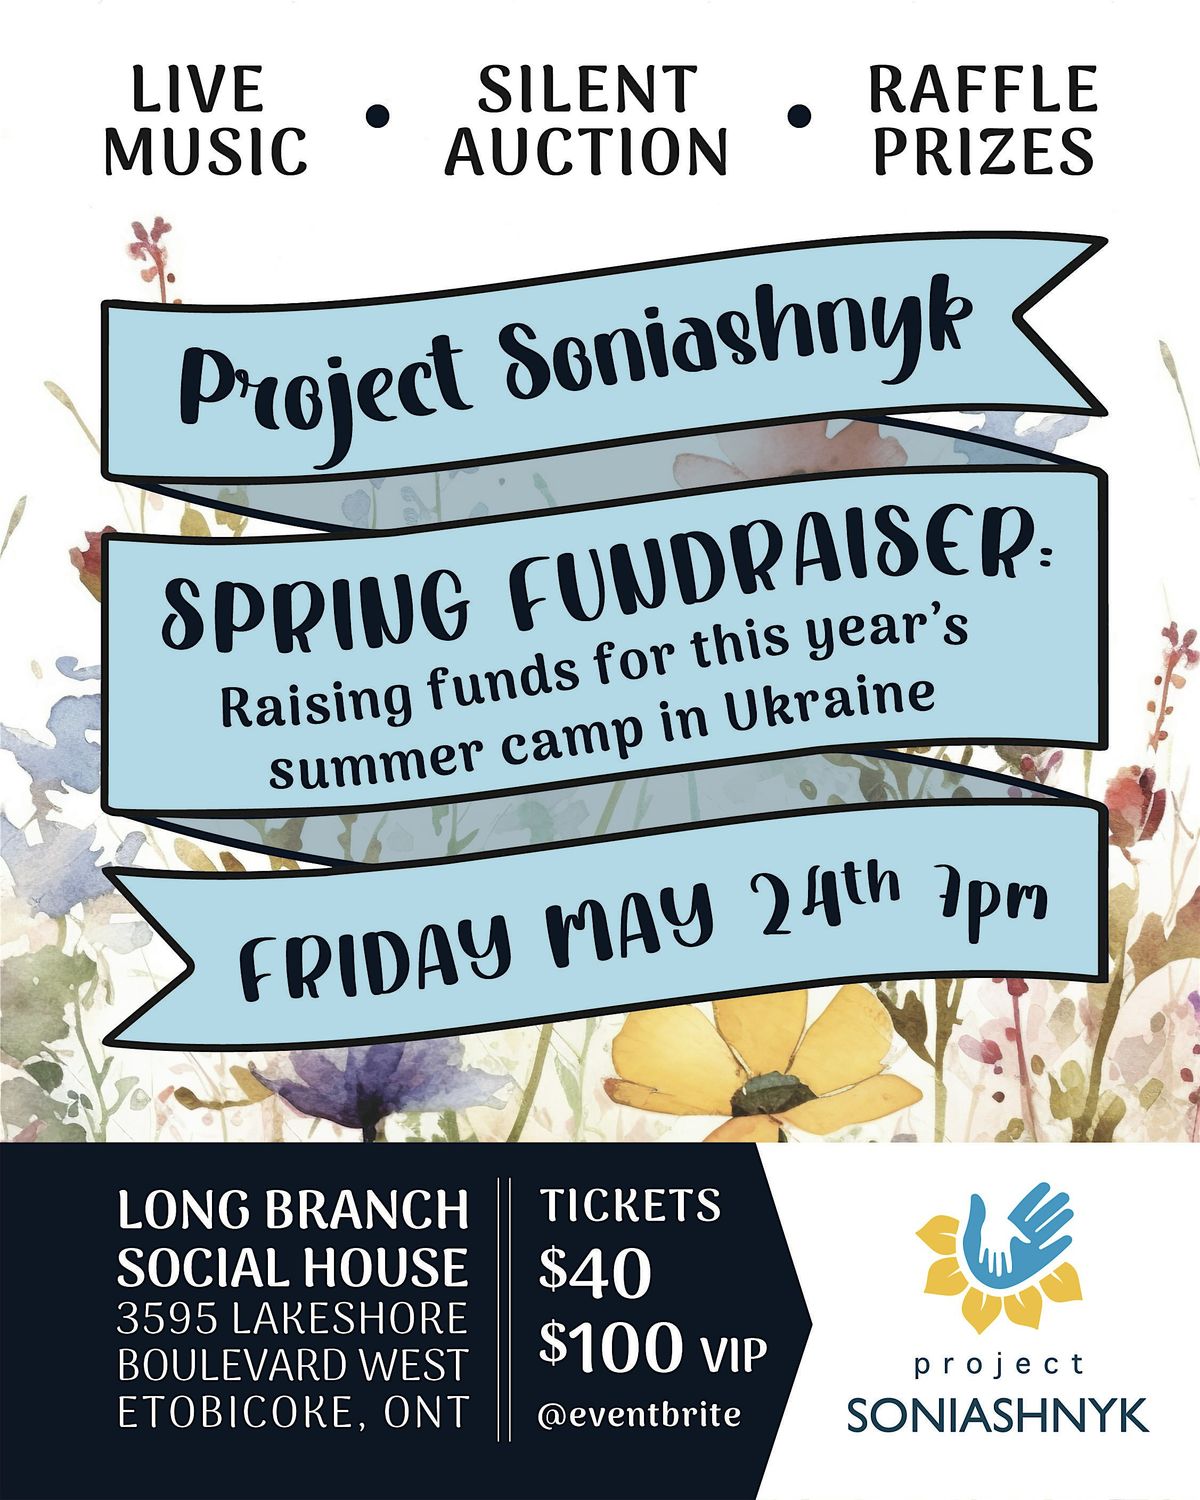 Project Soniashnyk's Spring Fundraiser